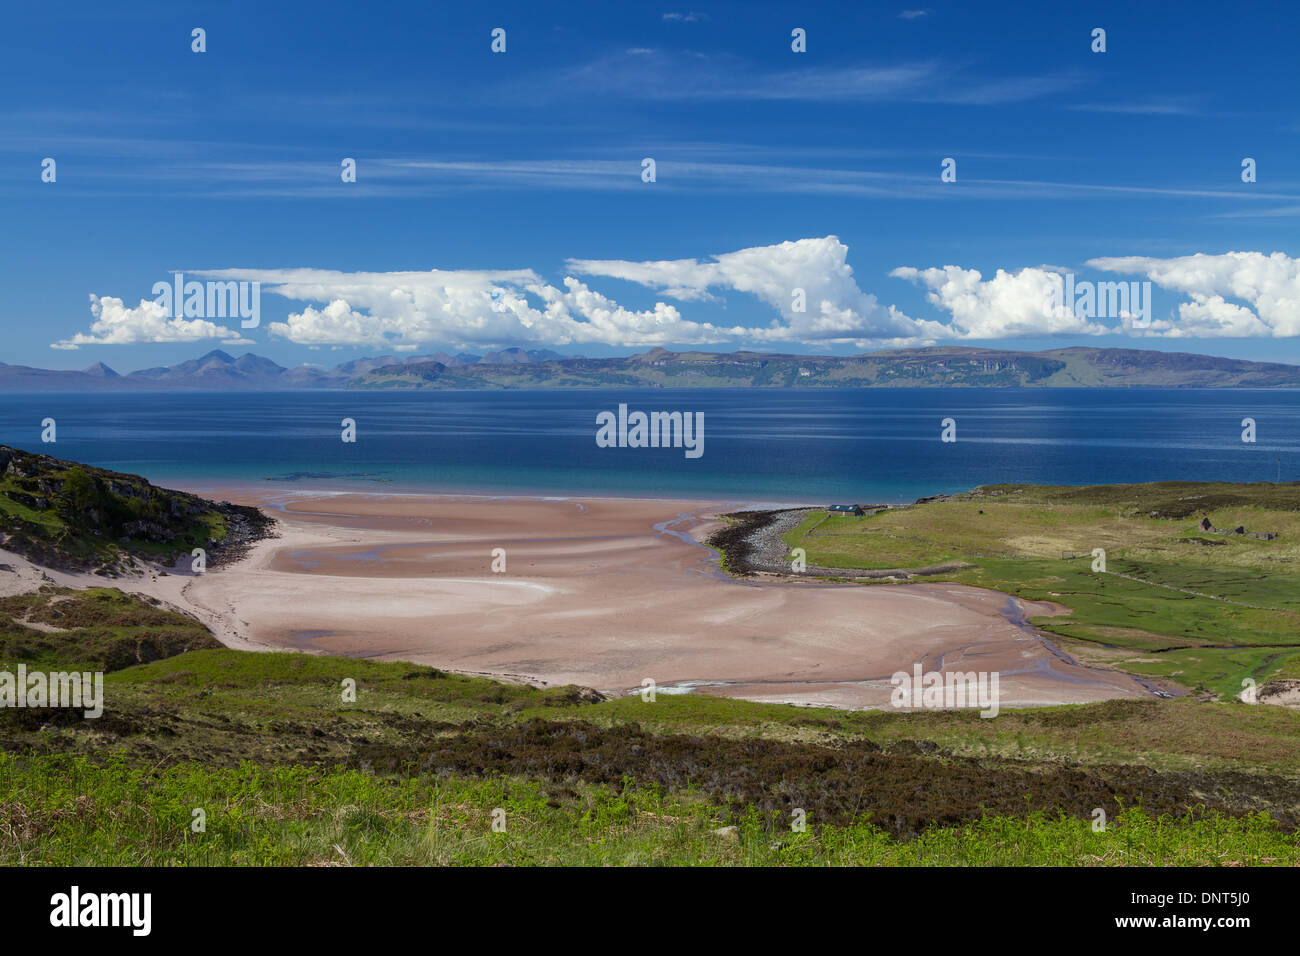 Monty Halls Gesprengte Ketten, einer tv-Sendung in Applecross, Wester Ross, Sand Bay, North West Highlands, Schottland gedreht. Stockfoto